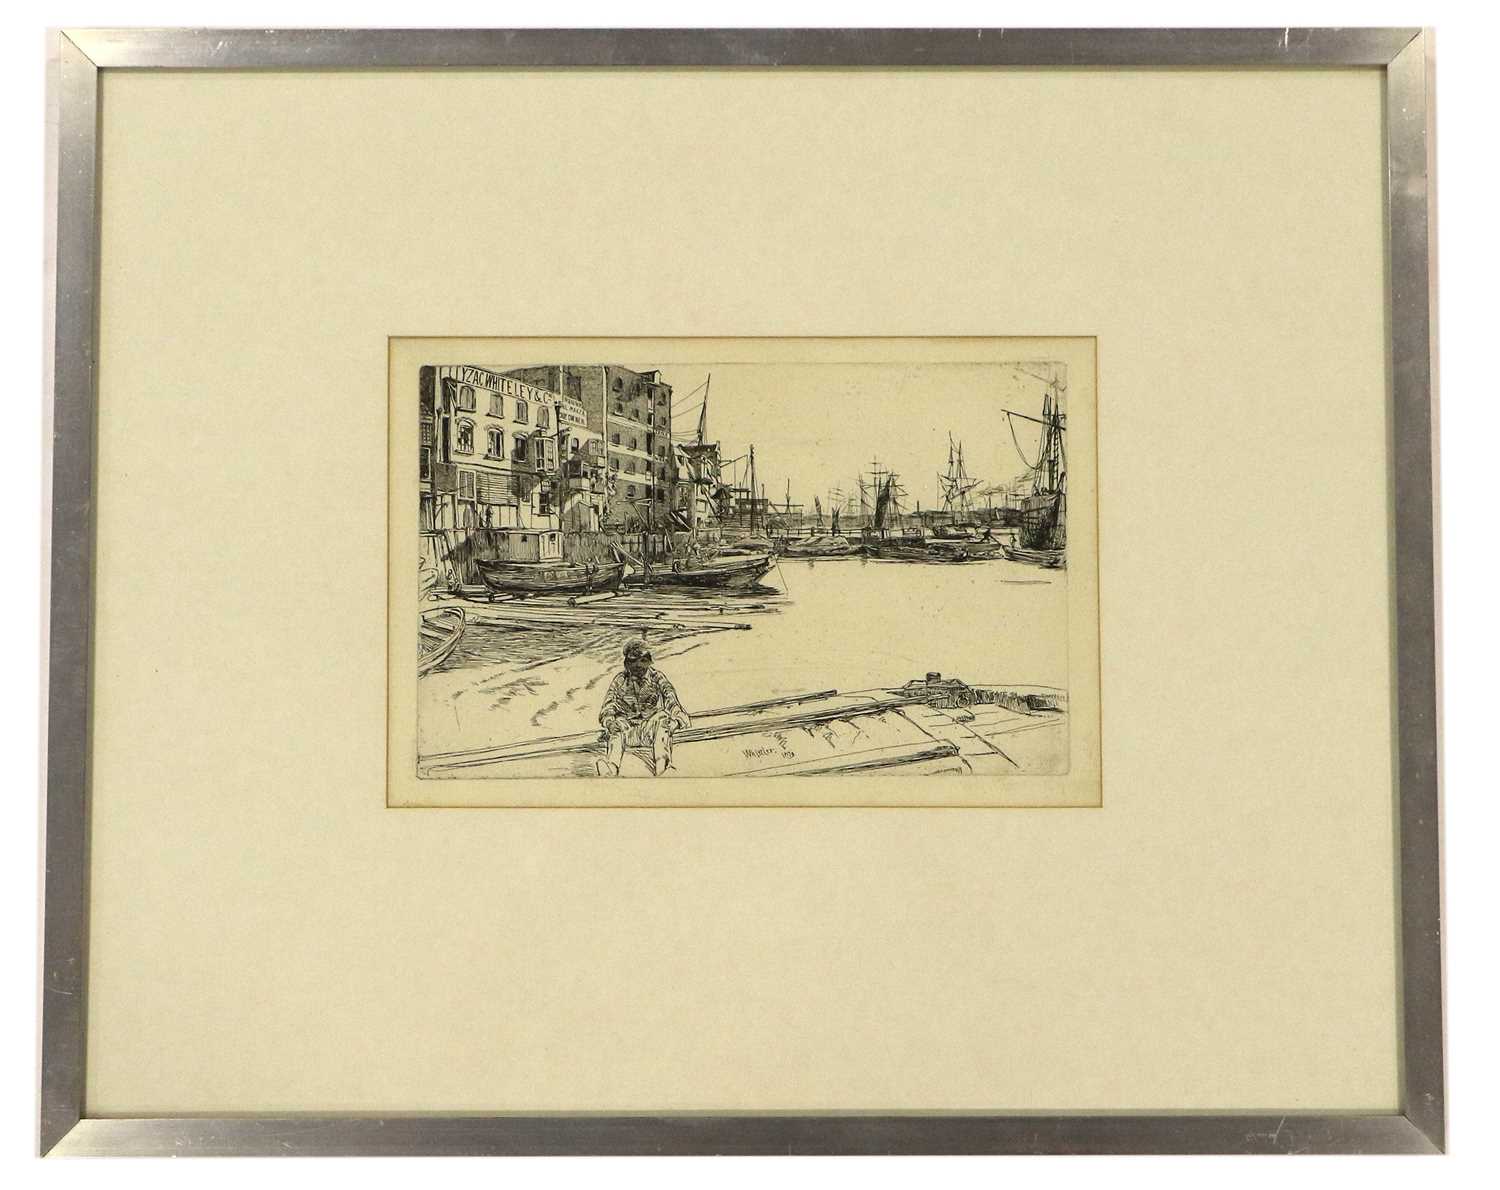 James Abbott McNeill Whistler RBA (1834-1903) "Black Lion Wharfe" (1889) Etching, 15.5cm by 23cm - Image 2 of 4